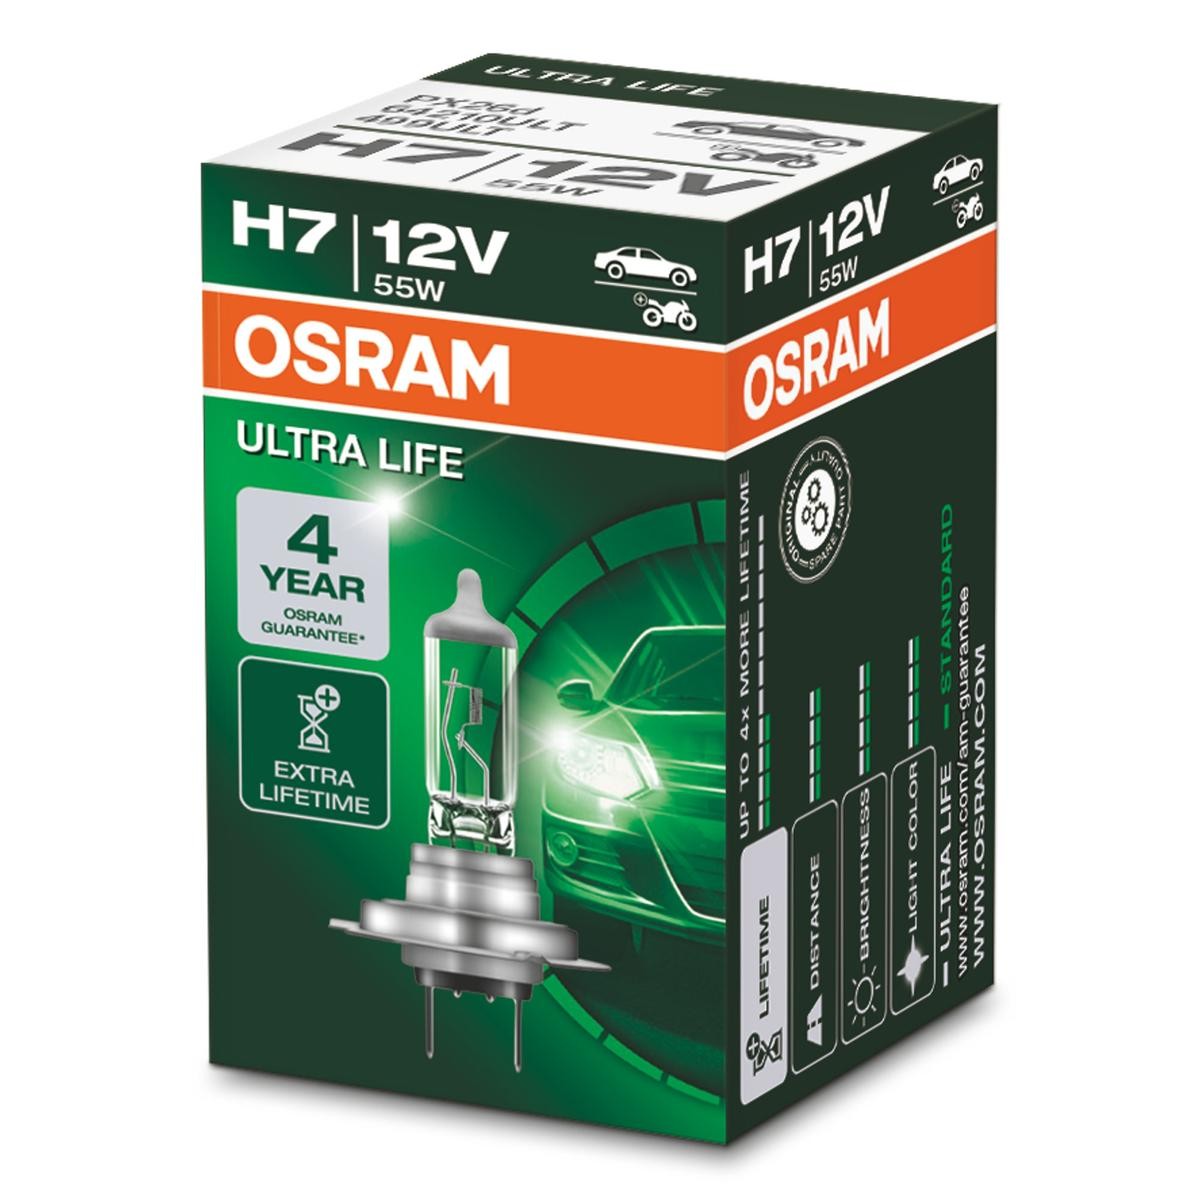 H7 OSRAM ULTRA LIFE H7 12V 55W PX26d 3200K Halogen Glühlampe, Fernscheinwerfer 64210ULT kaufen